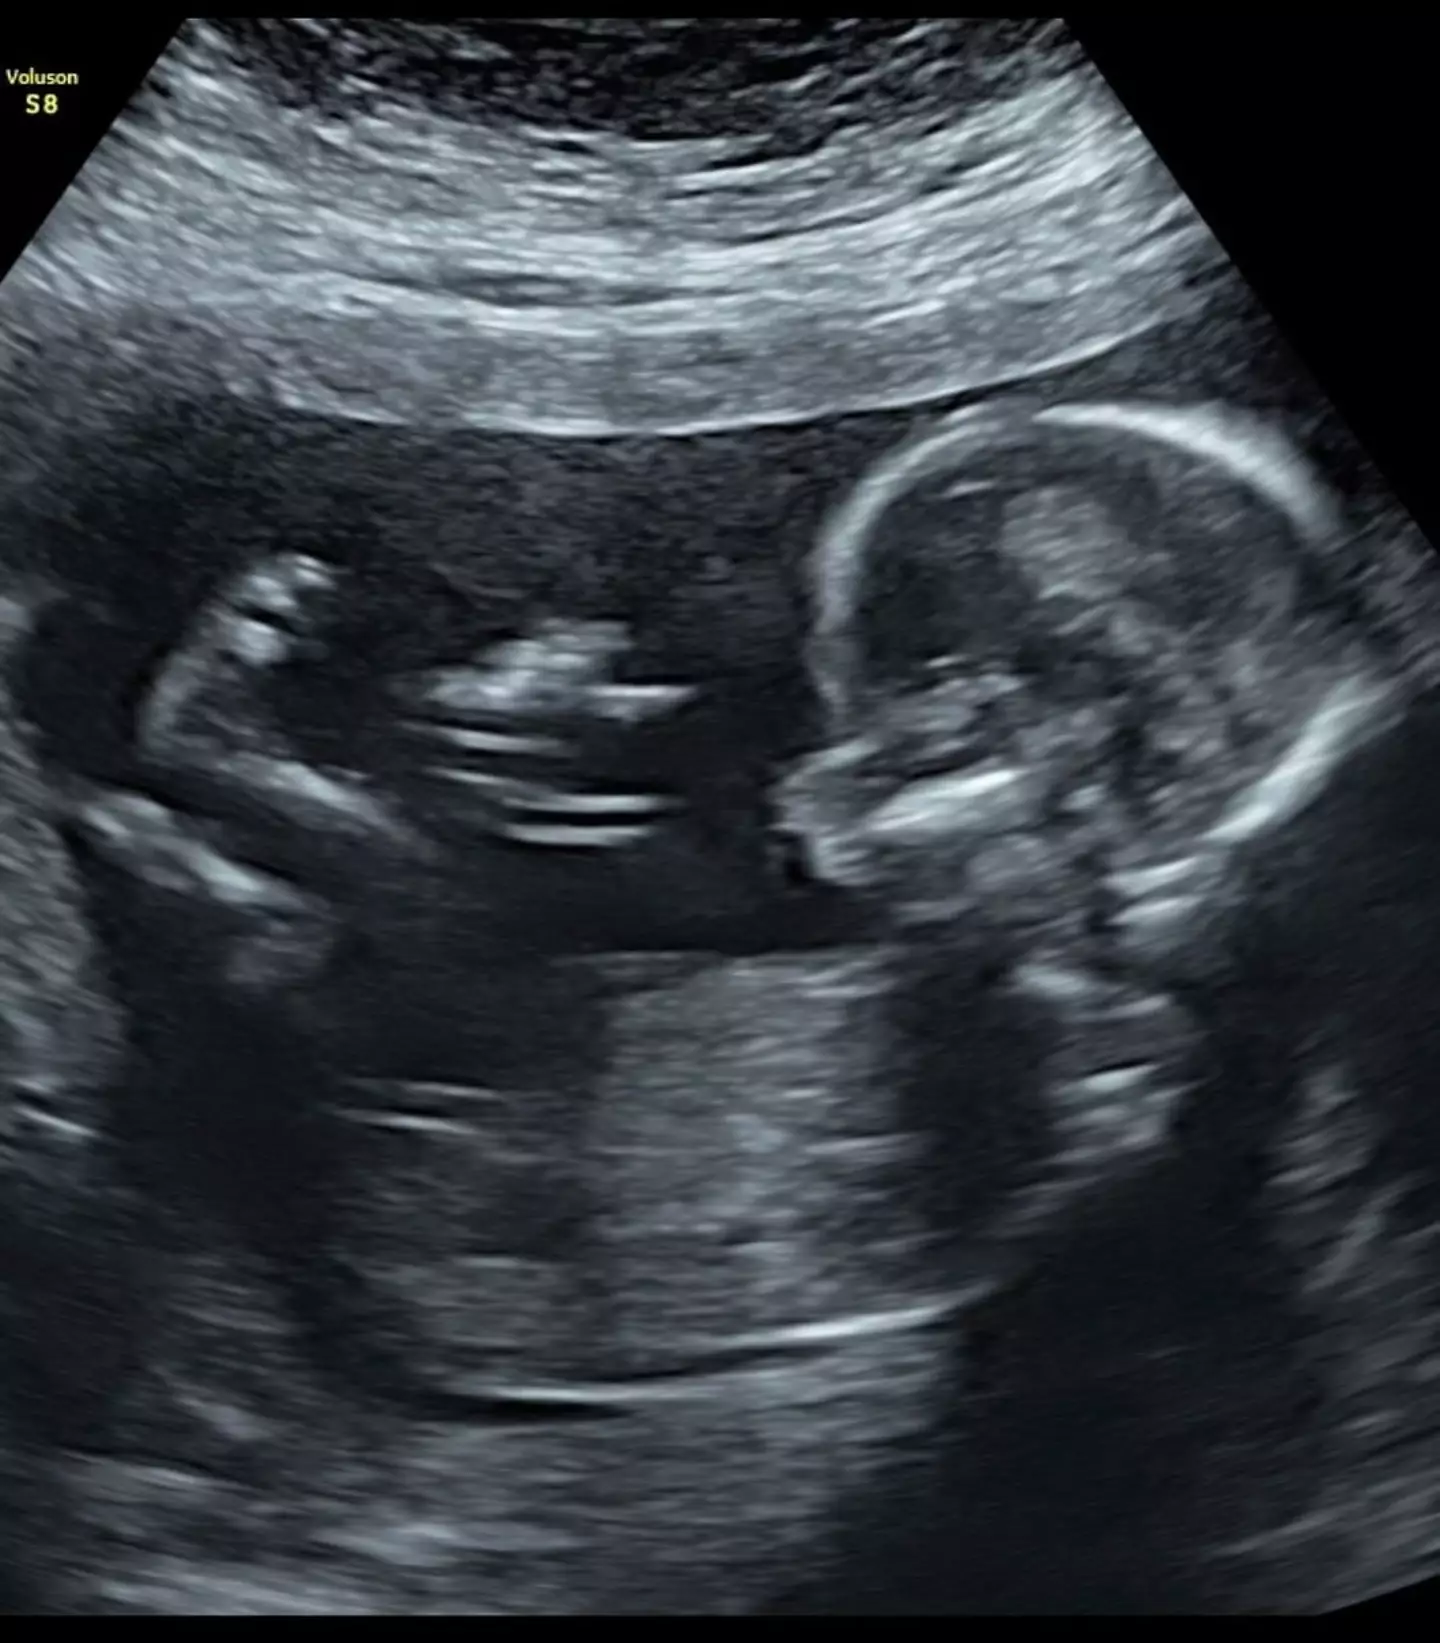 The MAFS star shared an ultrasound of her baby boy.